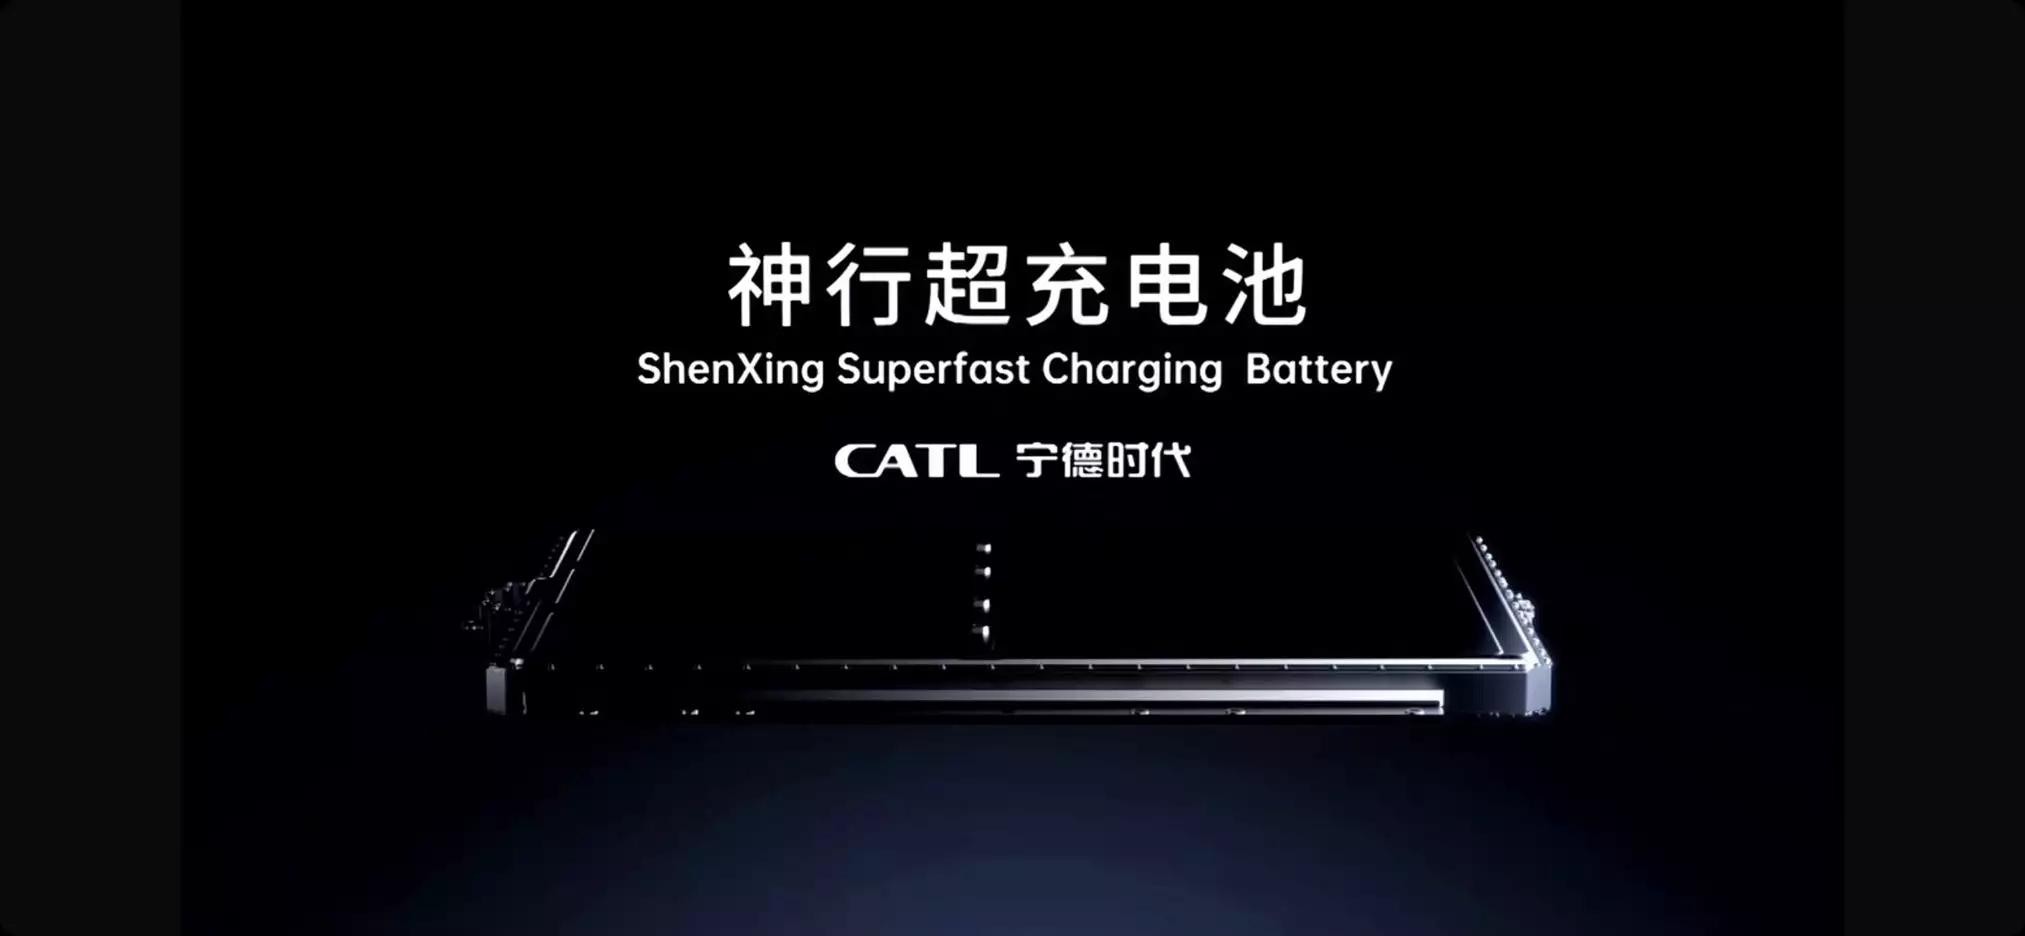 Shenxing Superfast Charging Battery